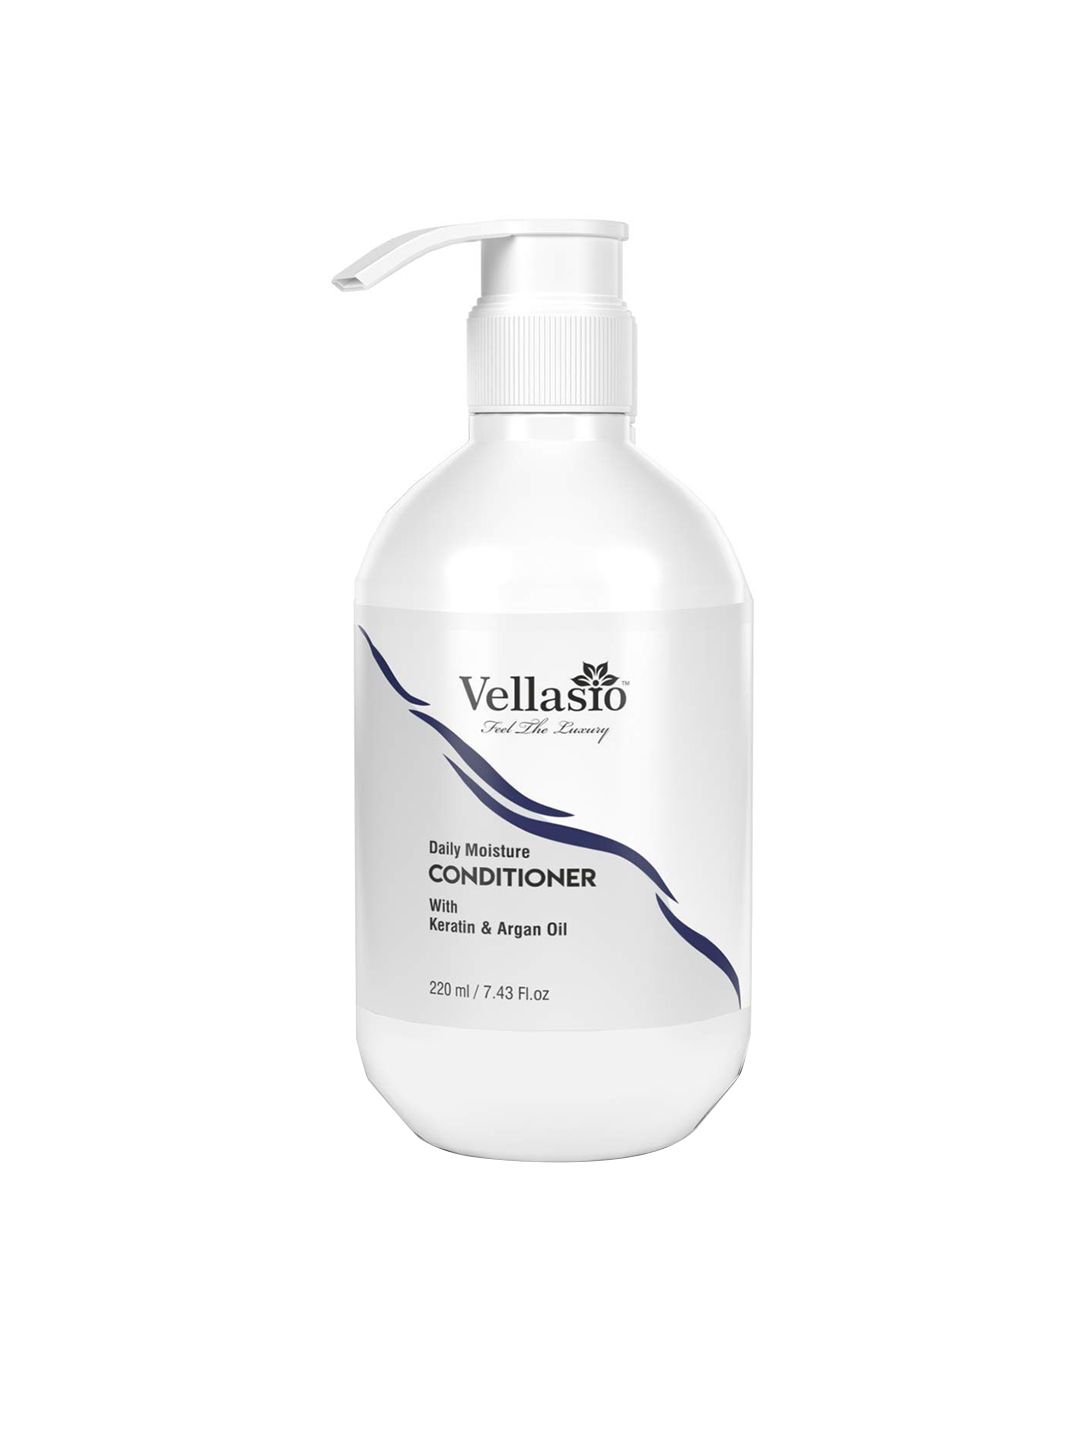 Vellasio Keratin & Argan Oil Daily Moisture Hair Conditioner - 220 ml Price in India